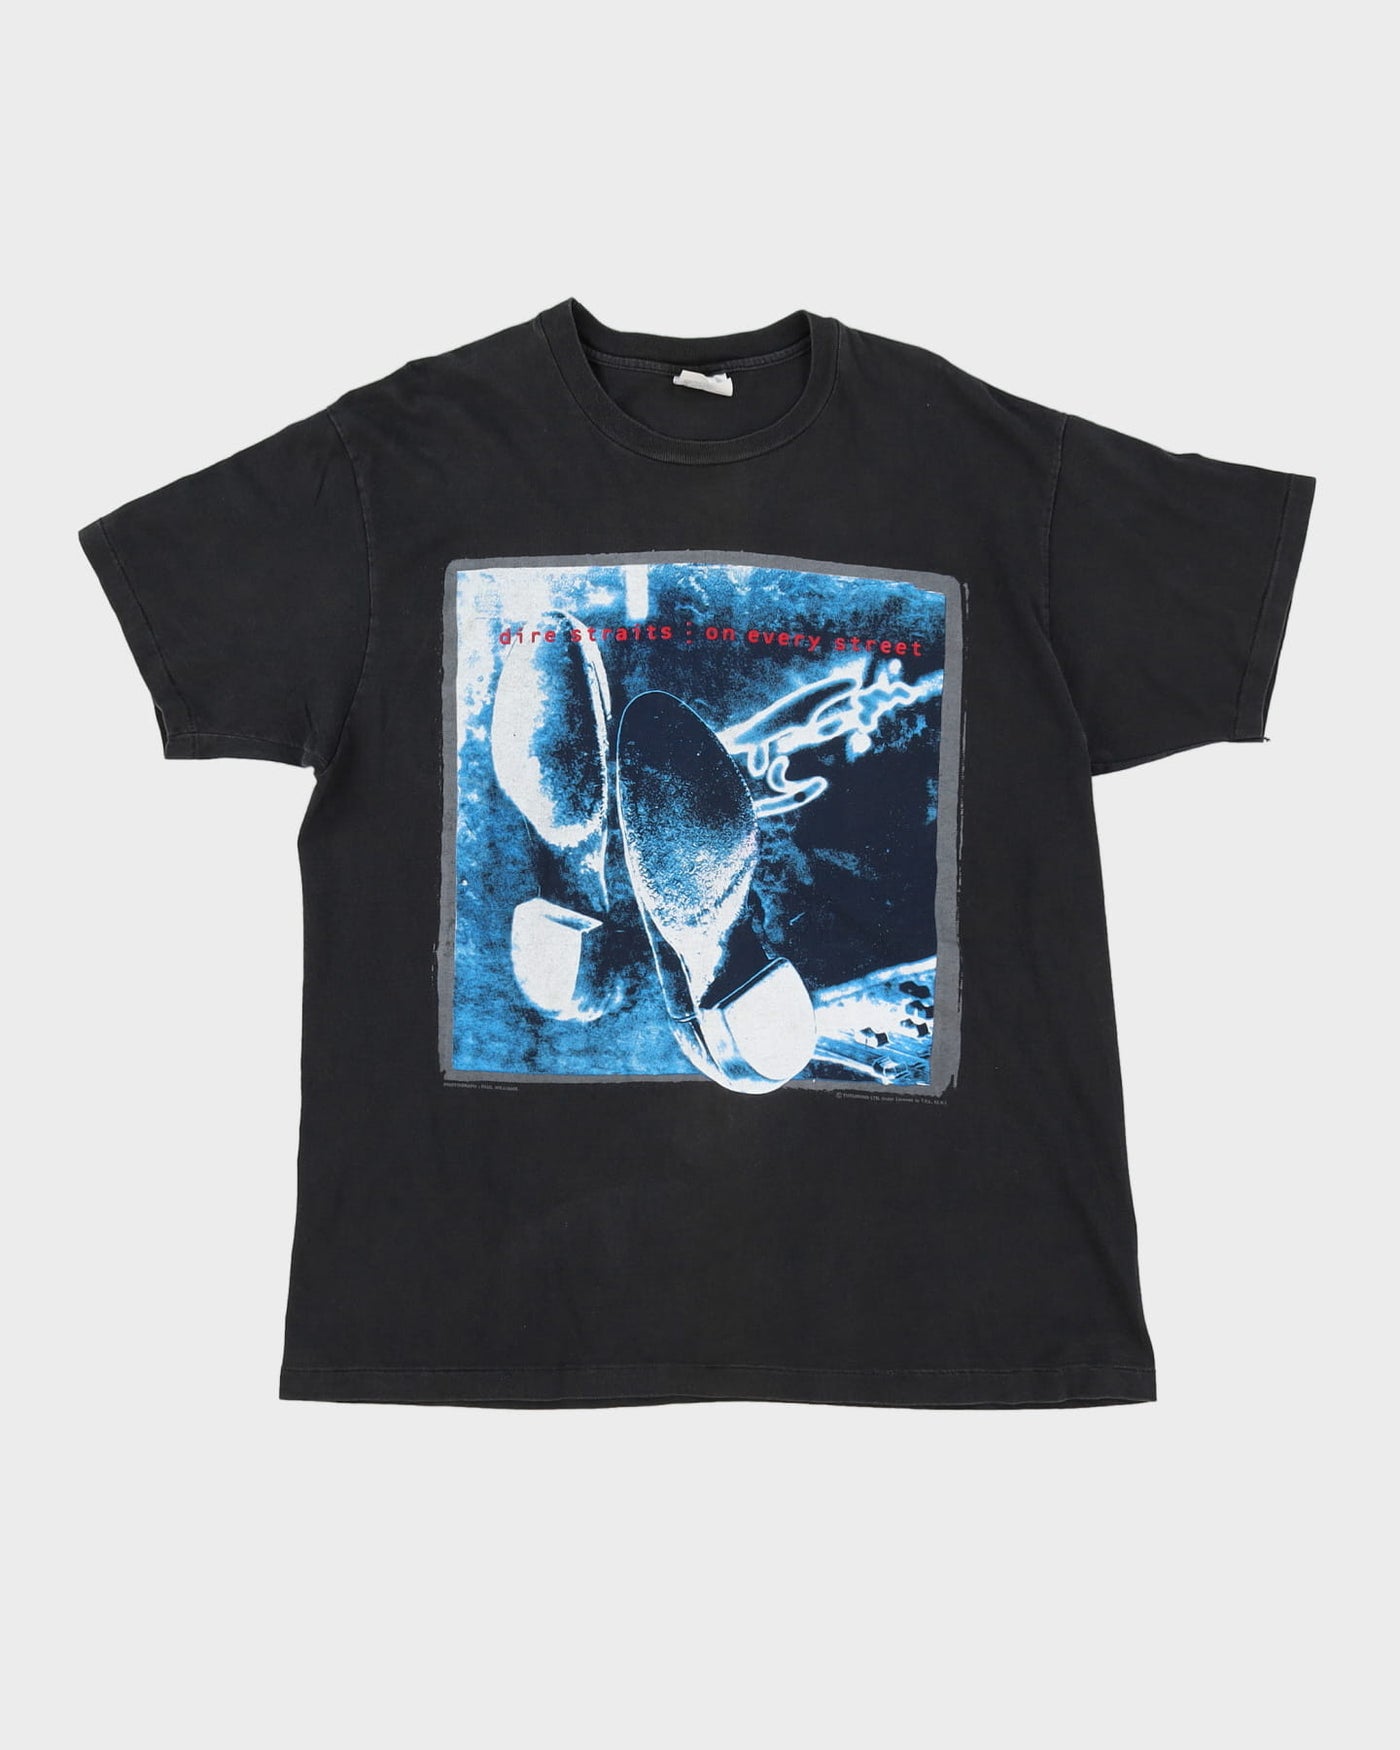 1992 Dire Straits On Every Street Black Single Stitch Graphic Band T-Shirt - XL